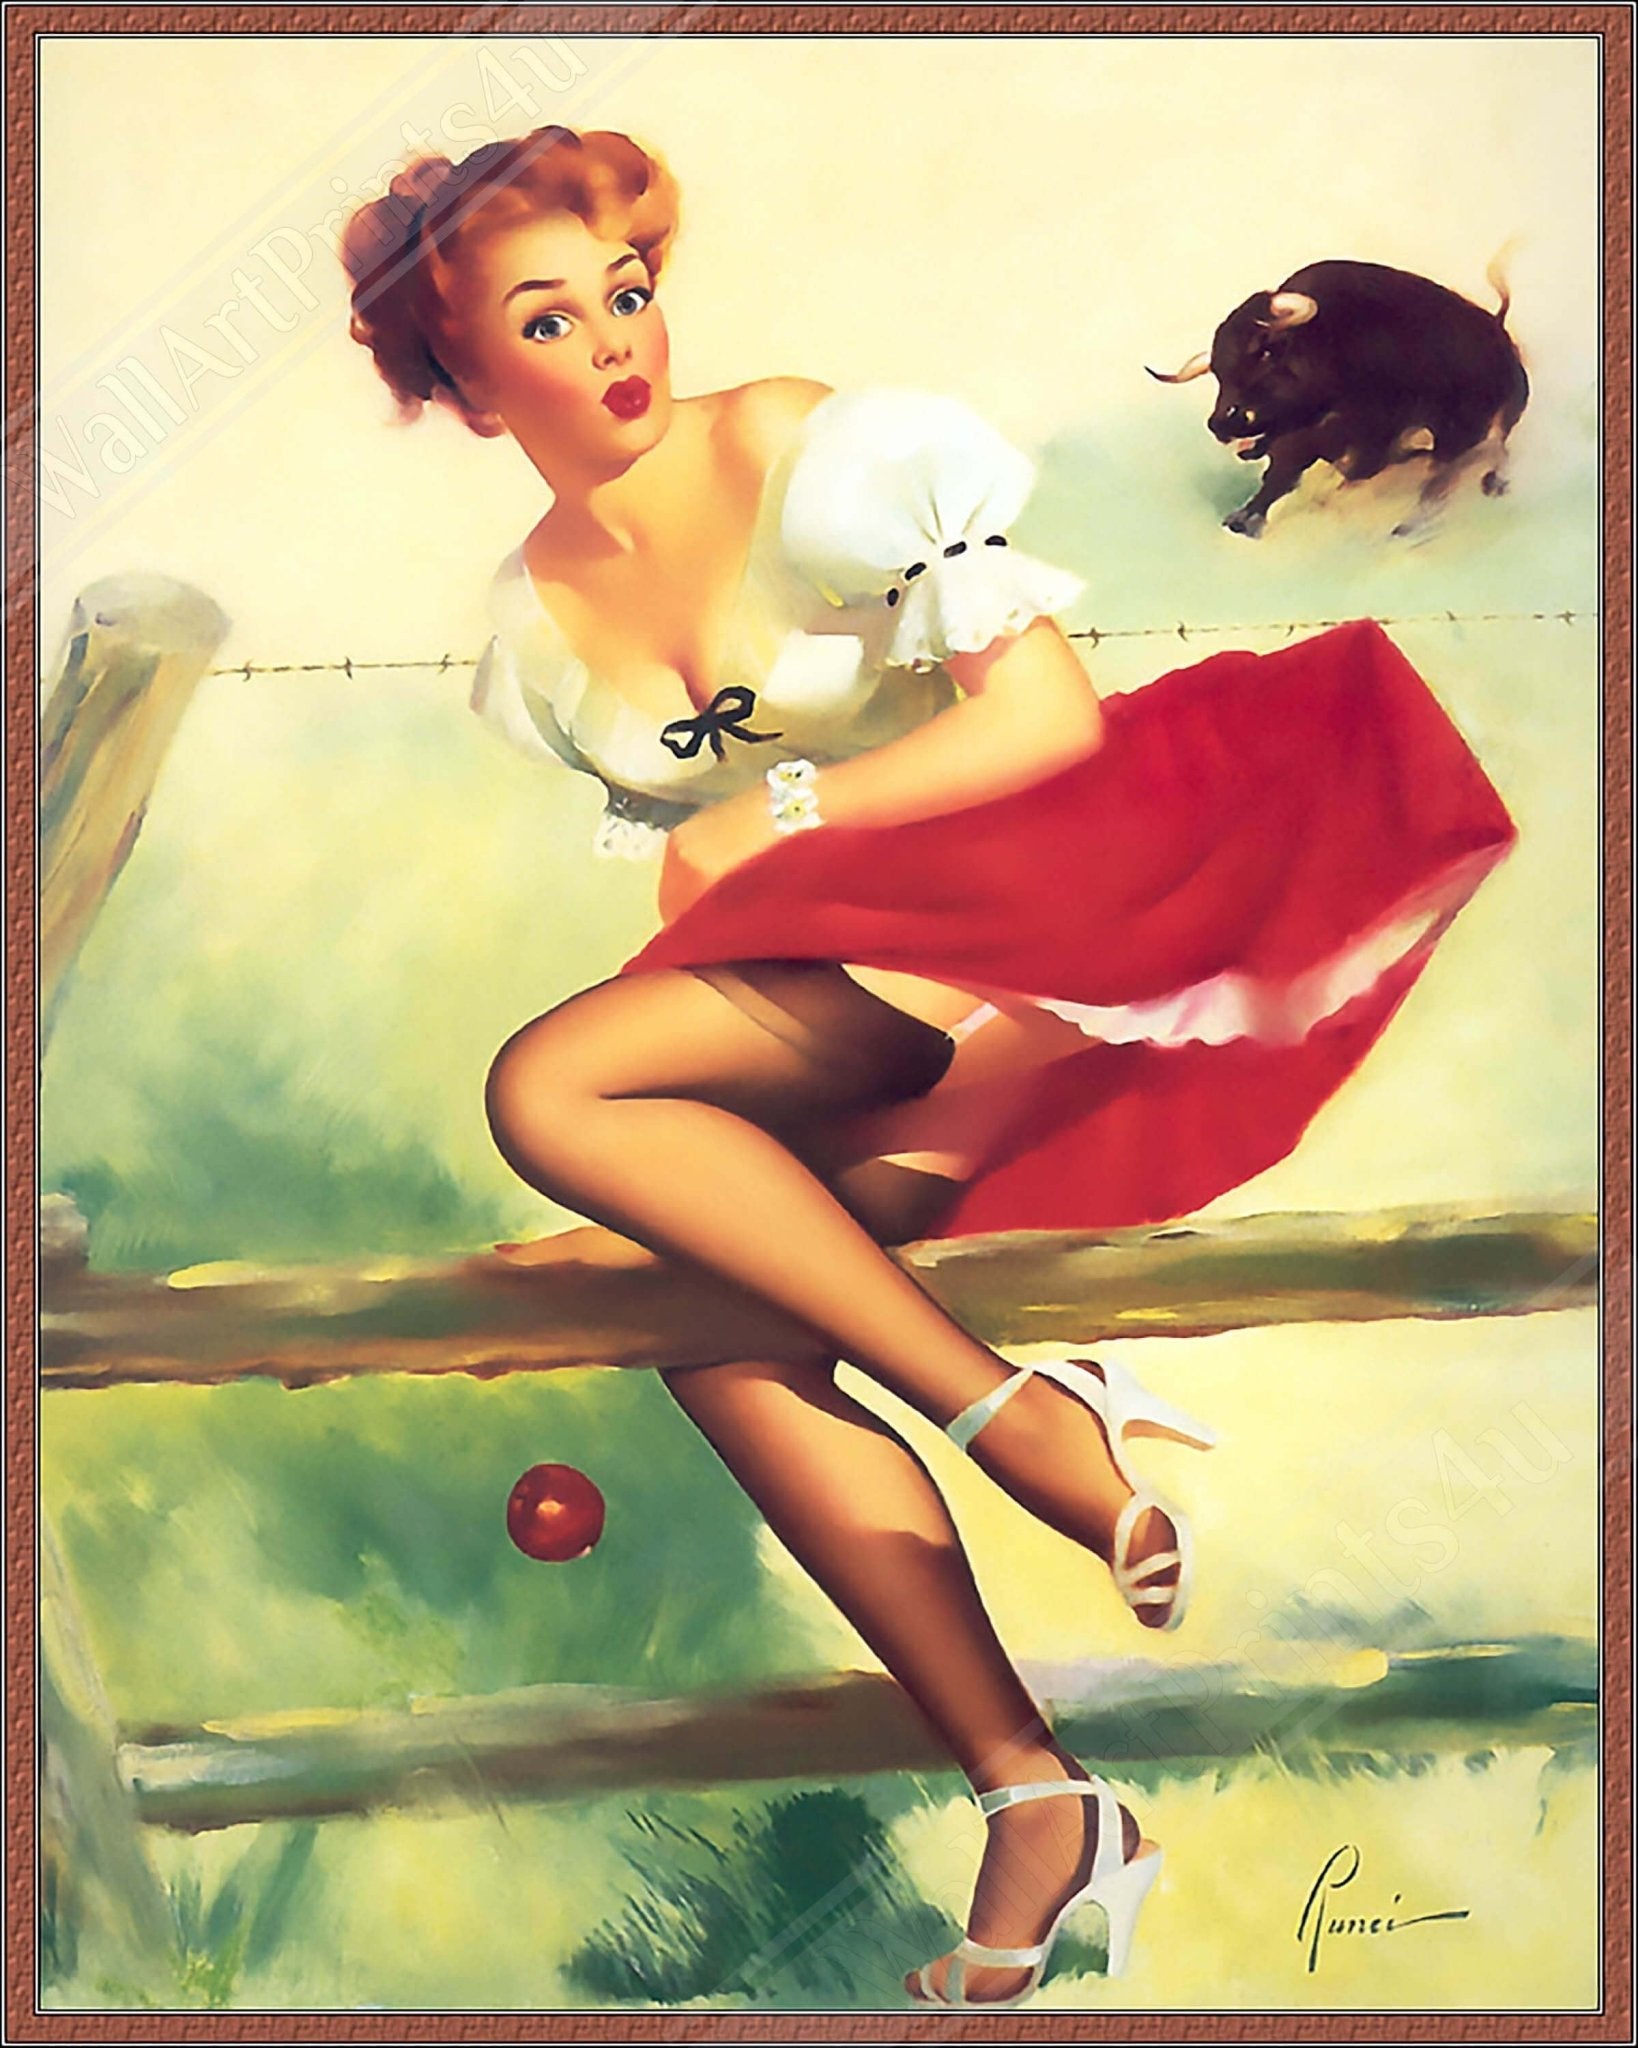 Pin Up Girl Canvas, Vintage Pin Up - The Escape - Retro Pin Up Girl Canvas Print- Edward Runci, - Late 1940'S - 1950'S - WallArtPrints4U